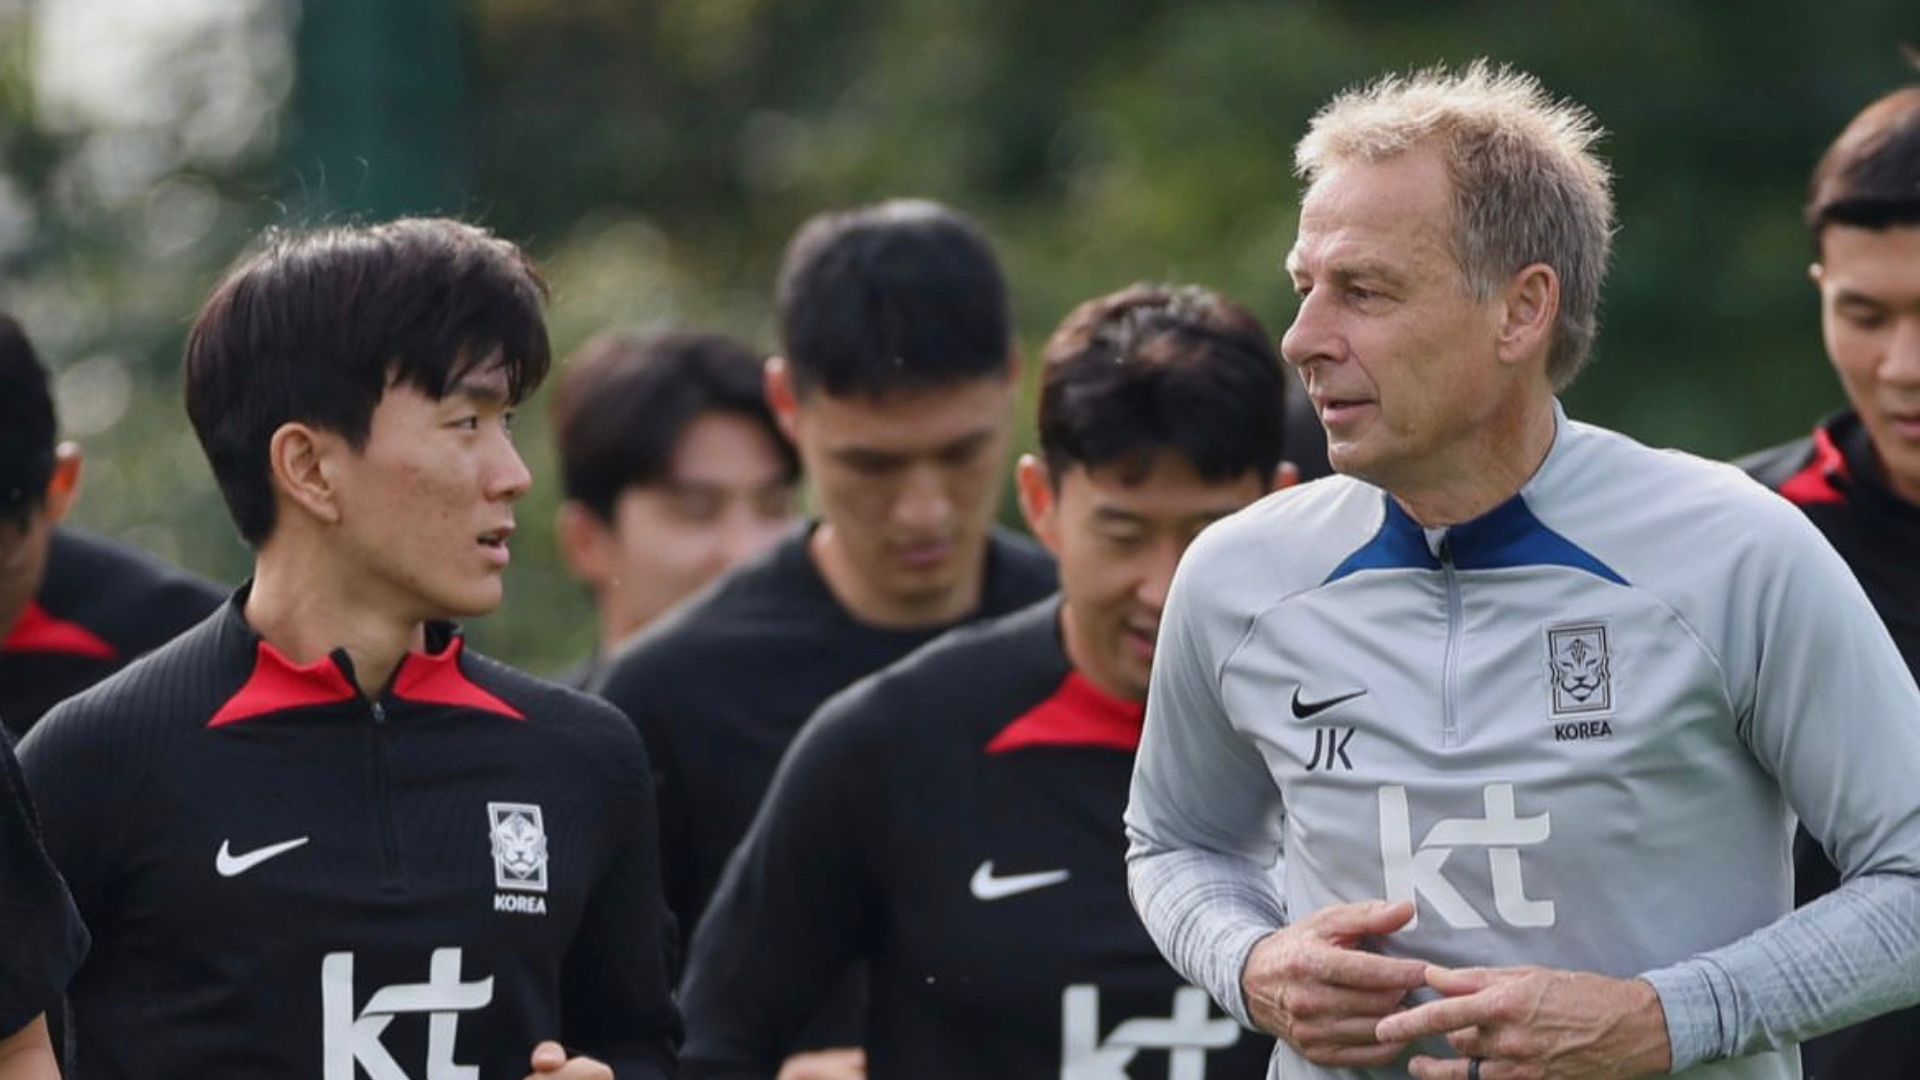 Korea Klinsmann Jürgen Klinsmann: Kalau Tak Suka Saya, Cari Jurulatih Lain